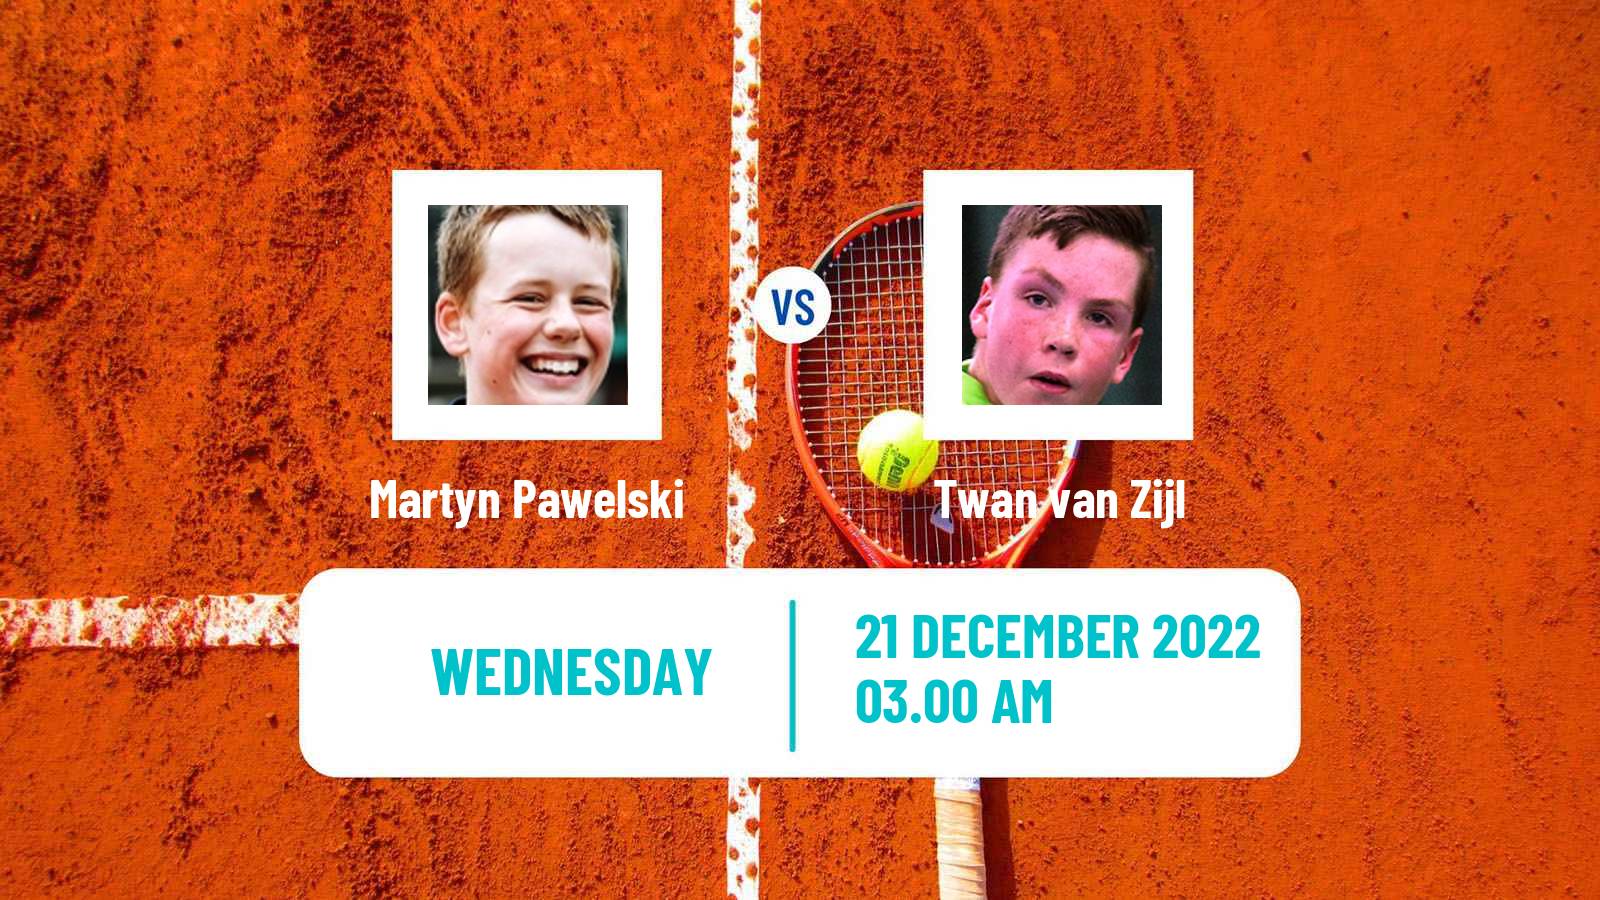 Tennis ITF Tournaments Martyn Pawelski - Twan van Zijl